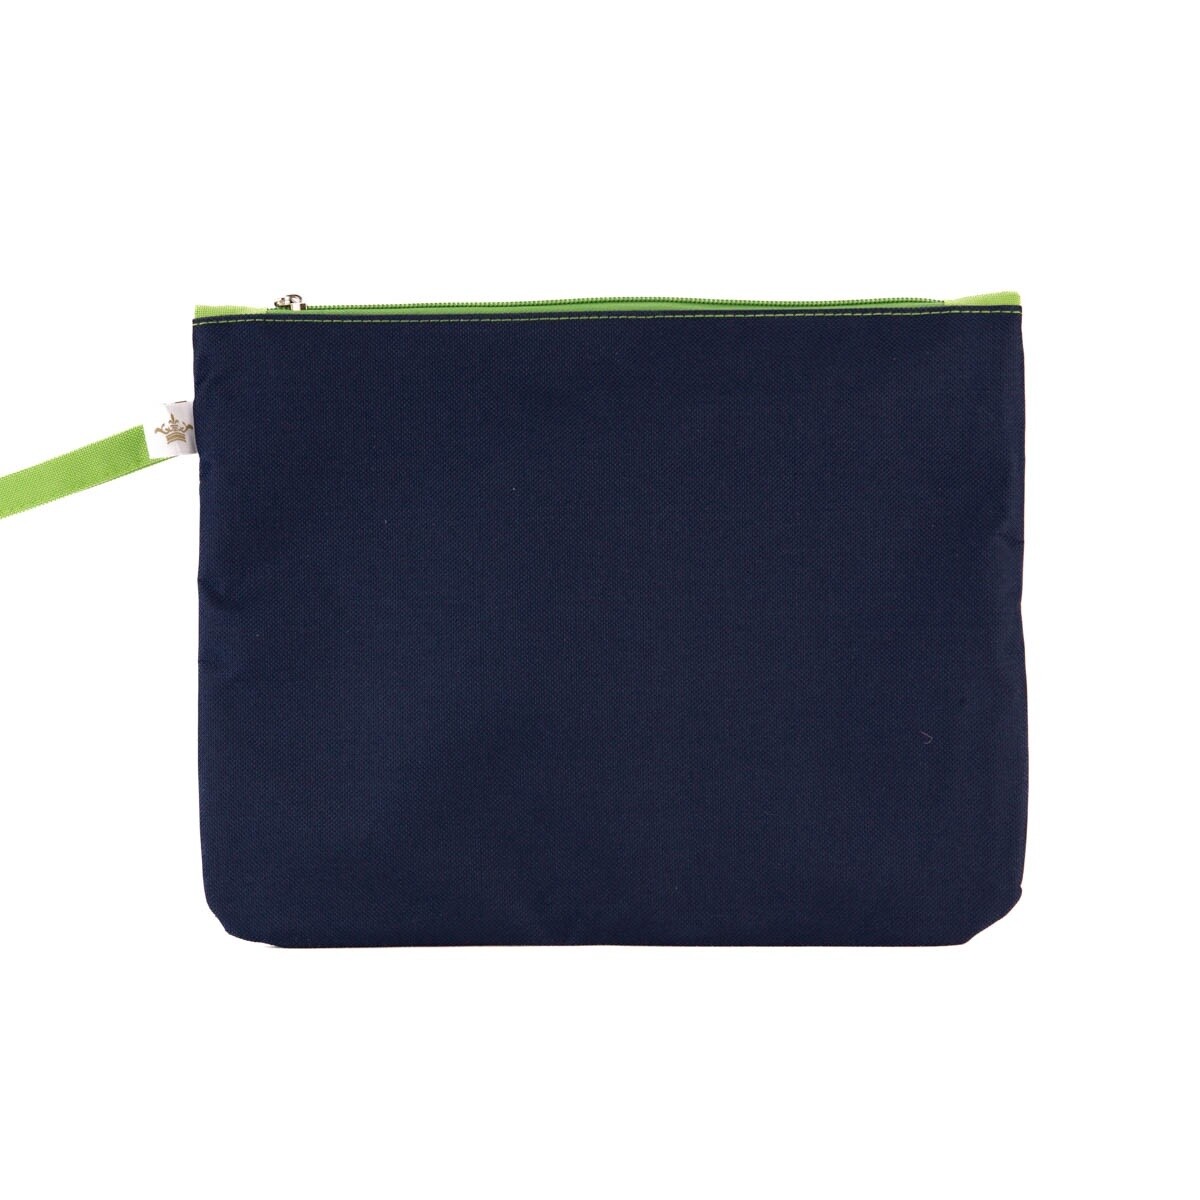 Wet Dry Bag, Design: Navy/Lime